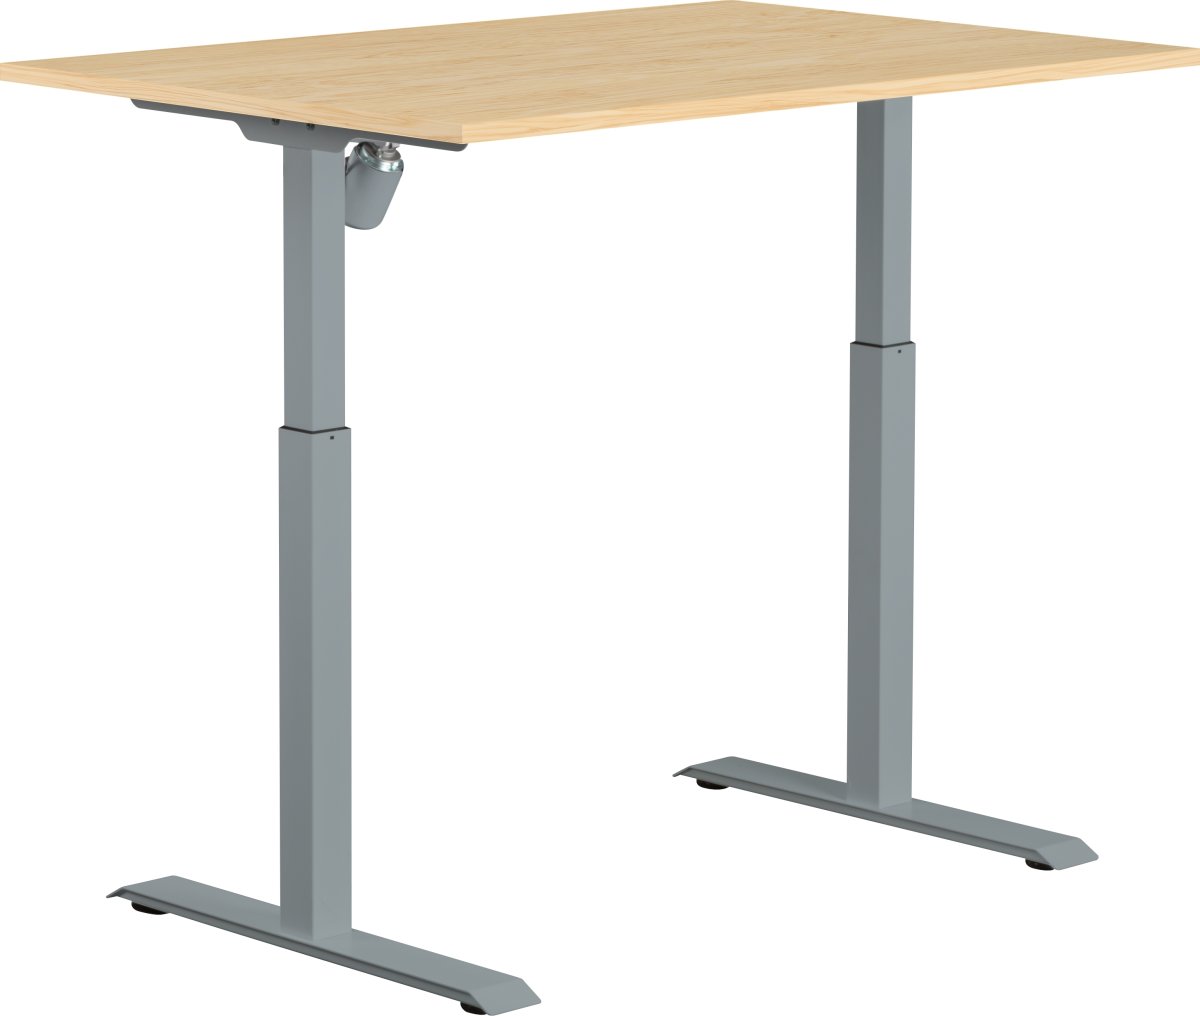 Sun-Flex I höj-/sänkbart bord, 120x80, grå/björk